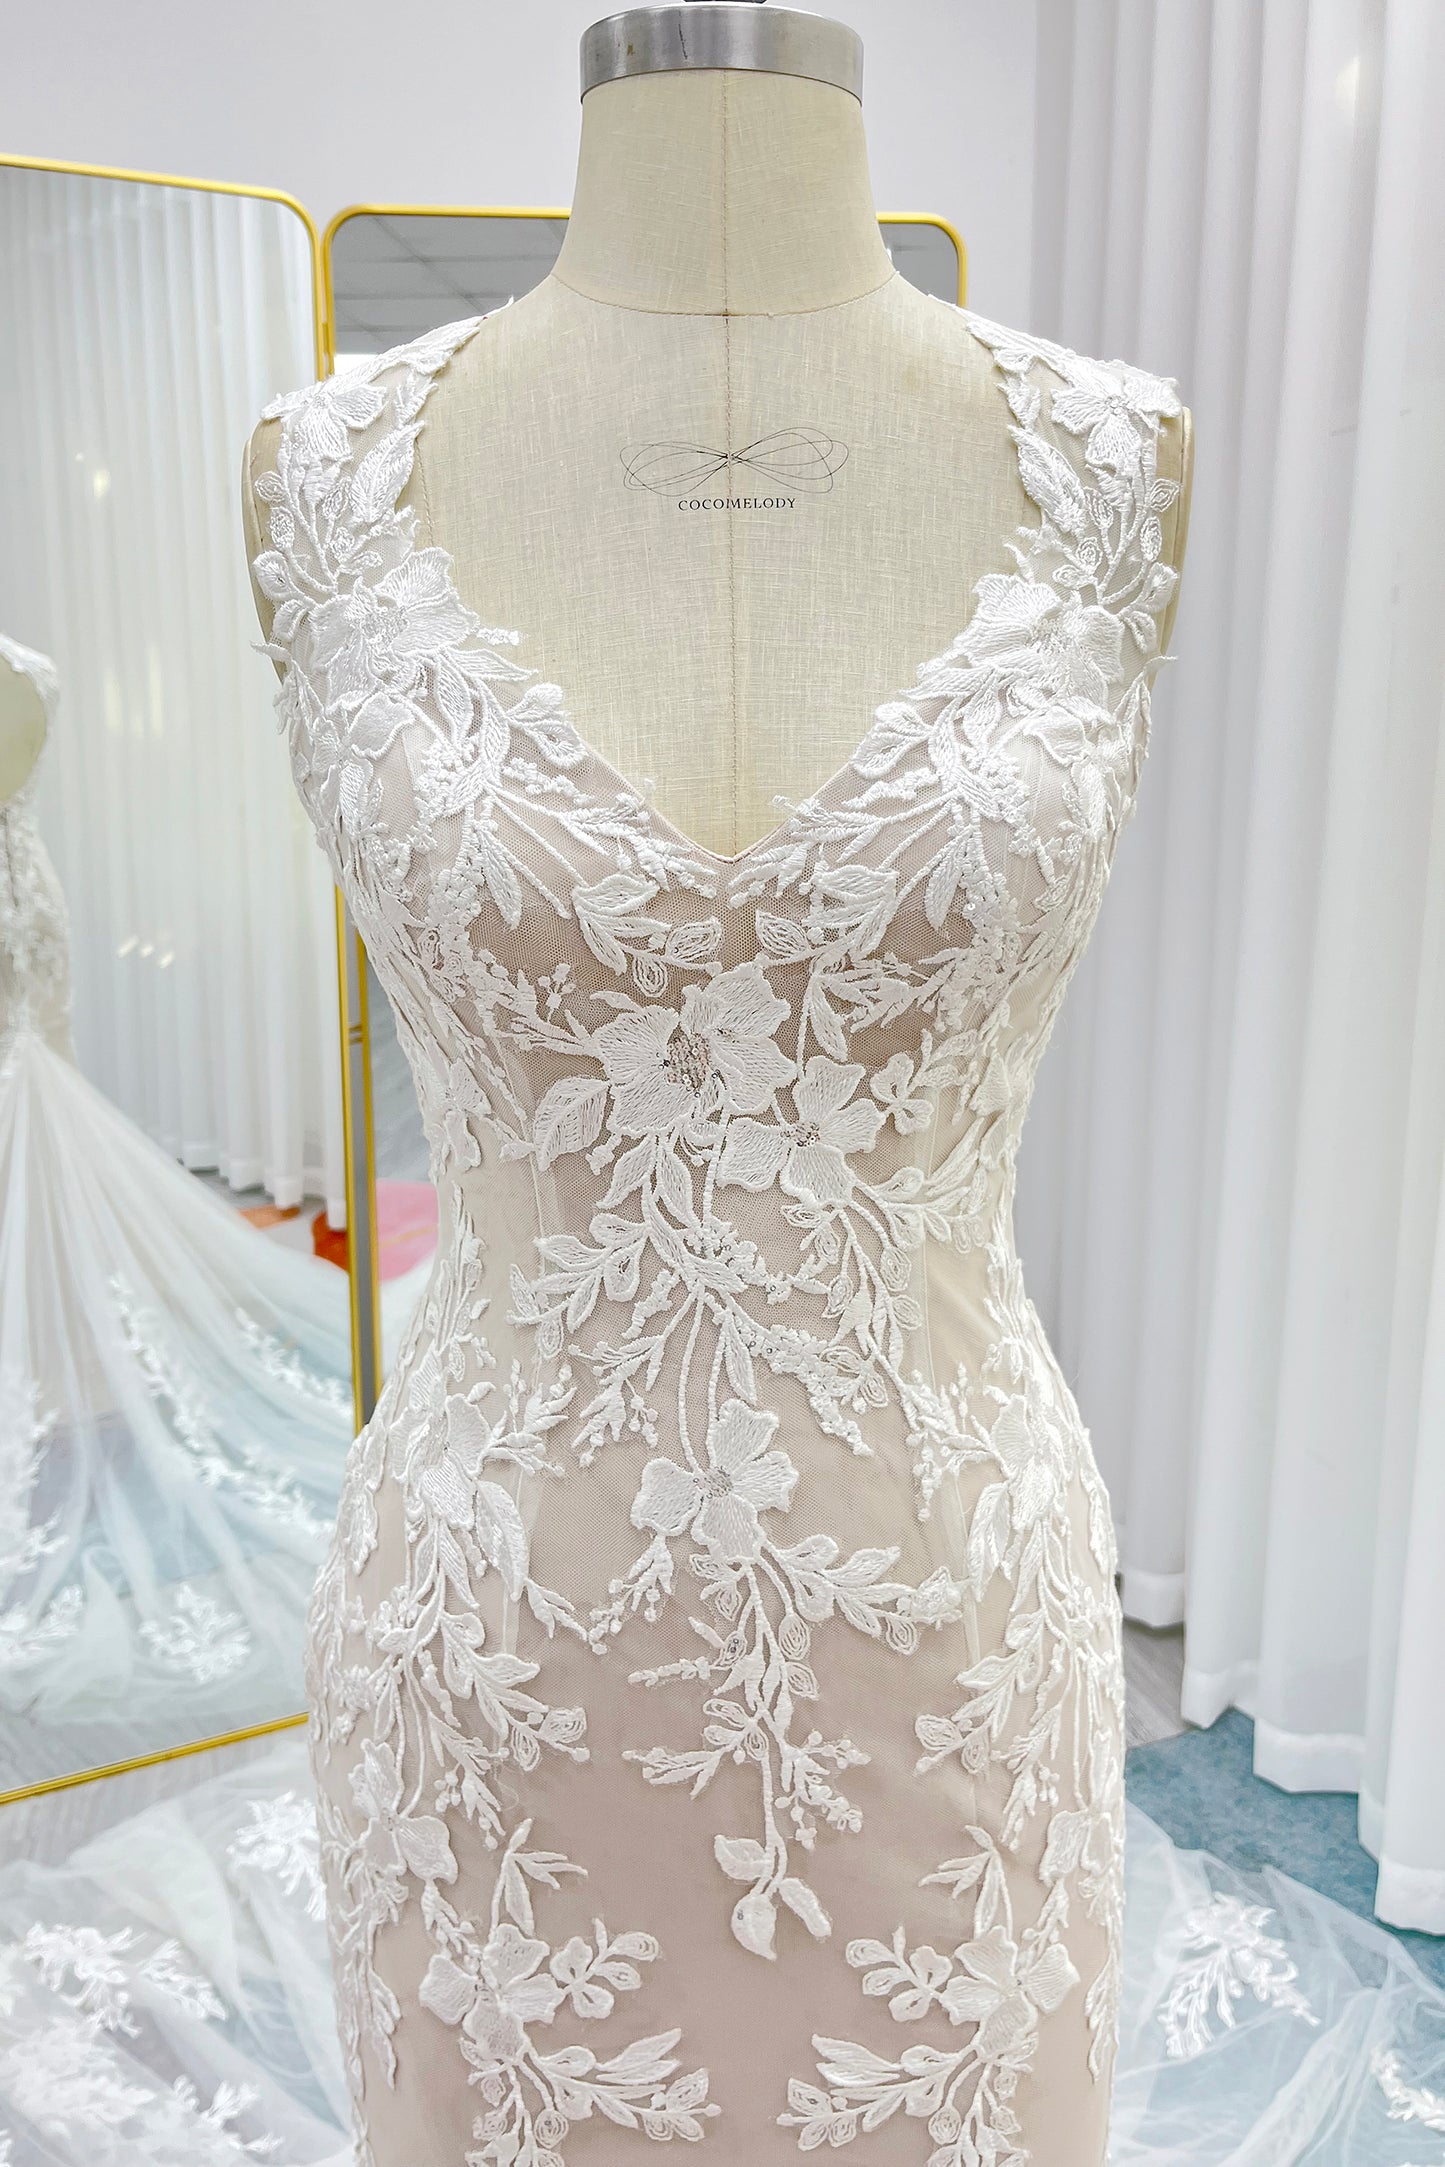 Trumpet-Mermaid Chapel Train Lace Tulle Wedding Dress CW3279